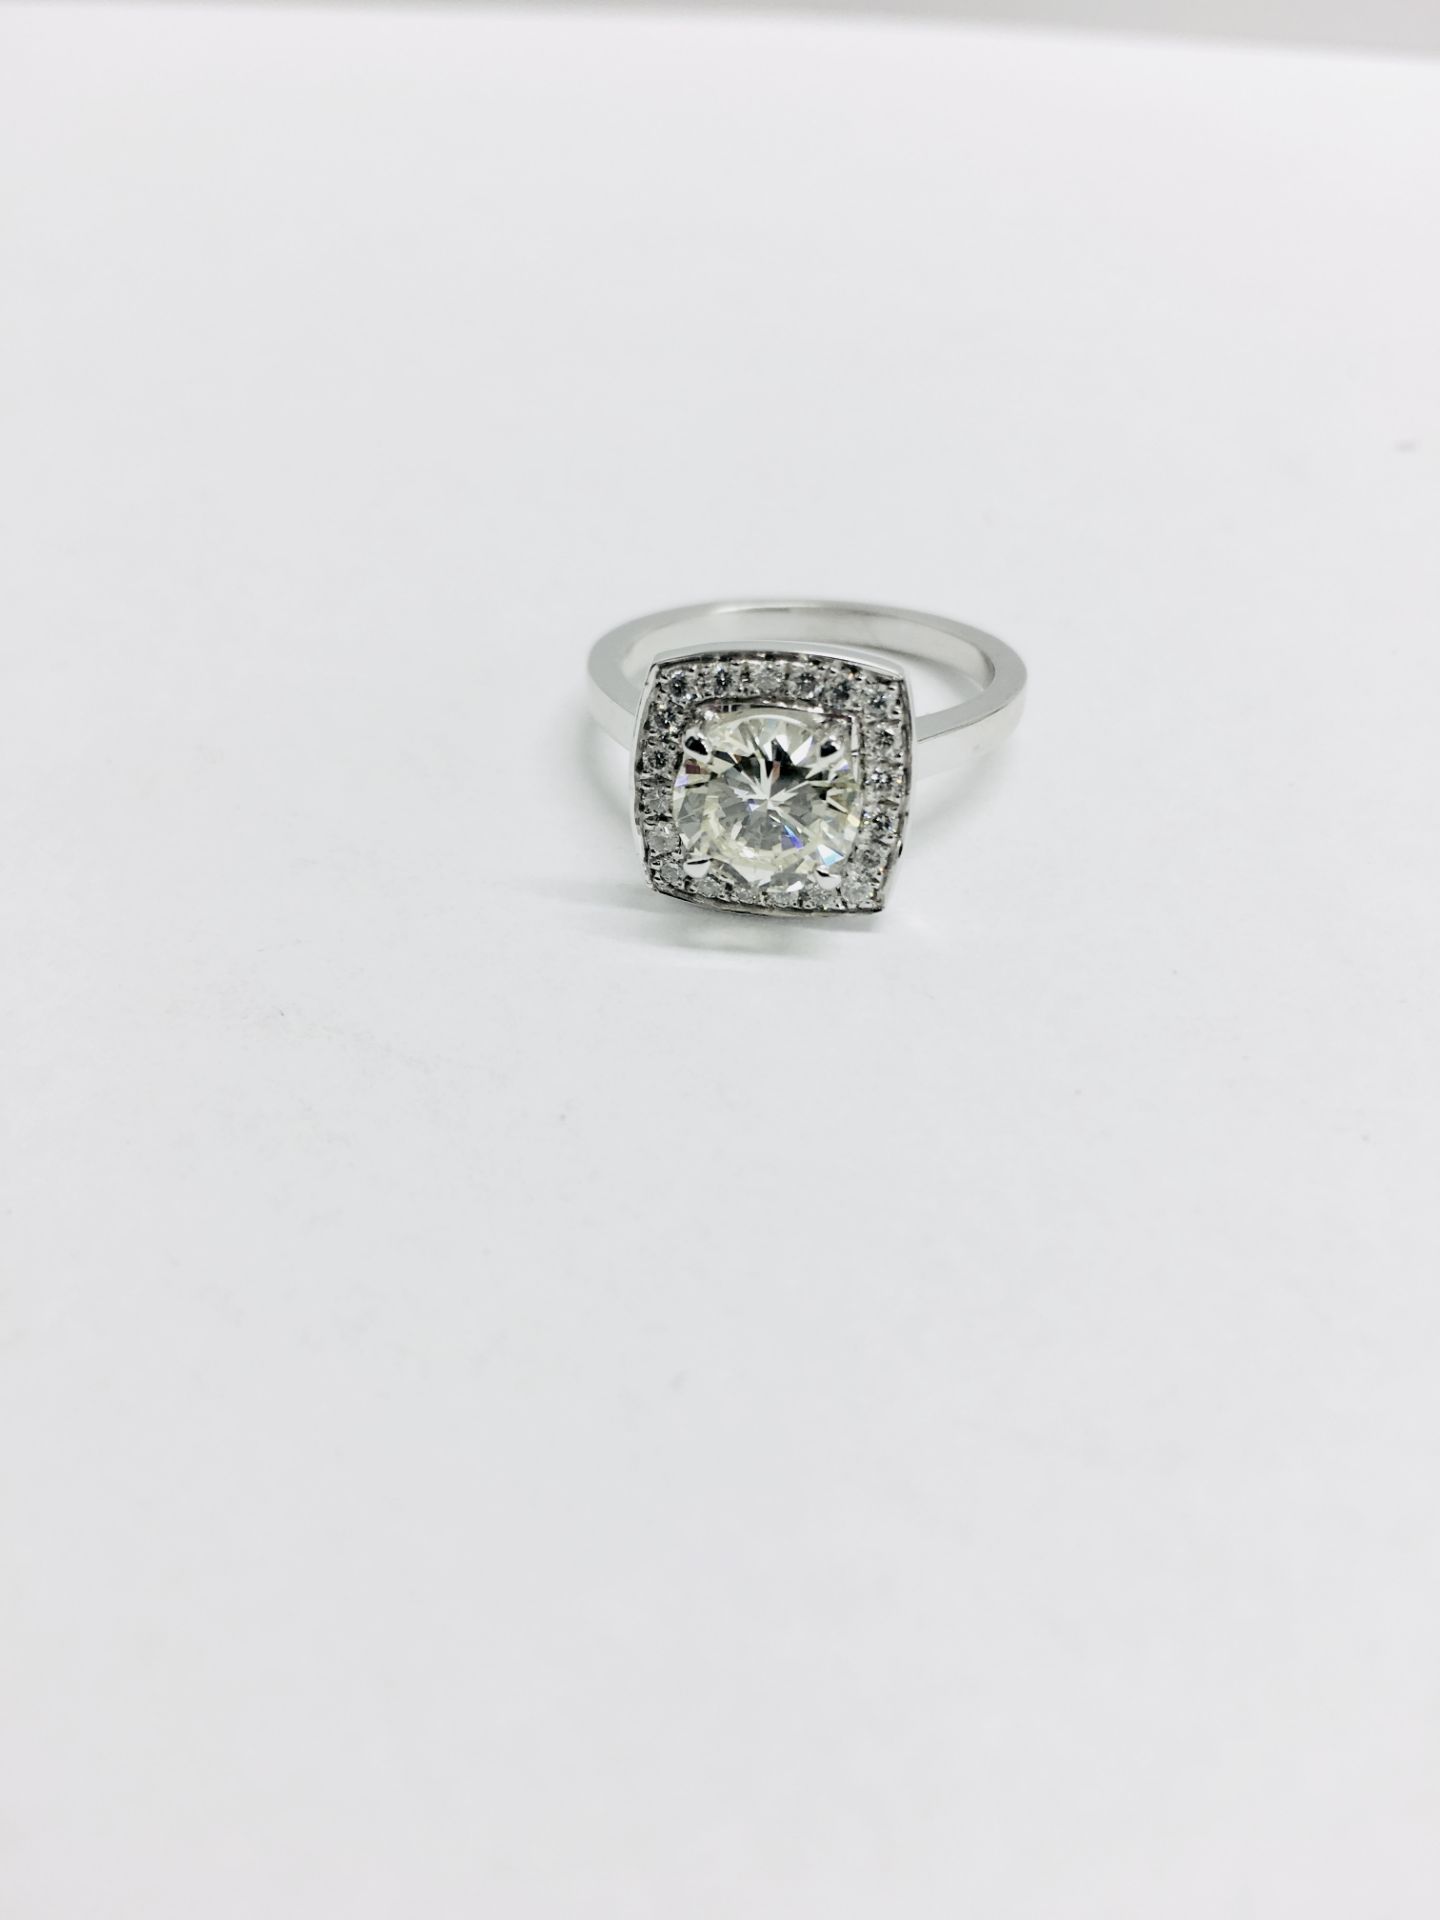 18ct white gold Handmade Halo style ring,0.50ct vs grade h colour diamond(clarity enhanced) - Image 5 of 5